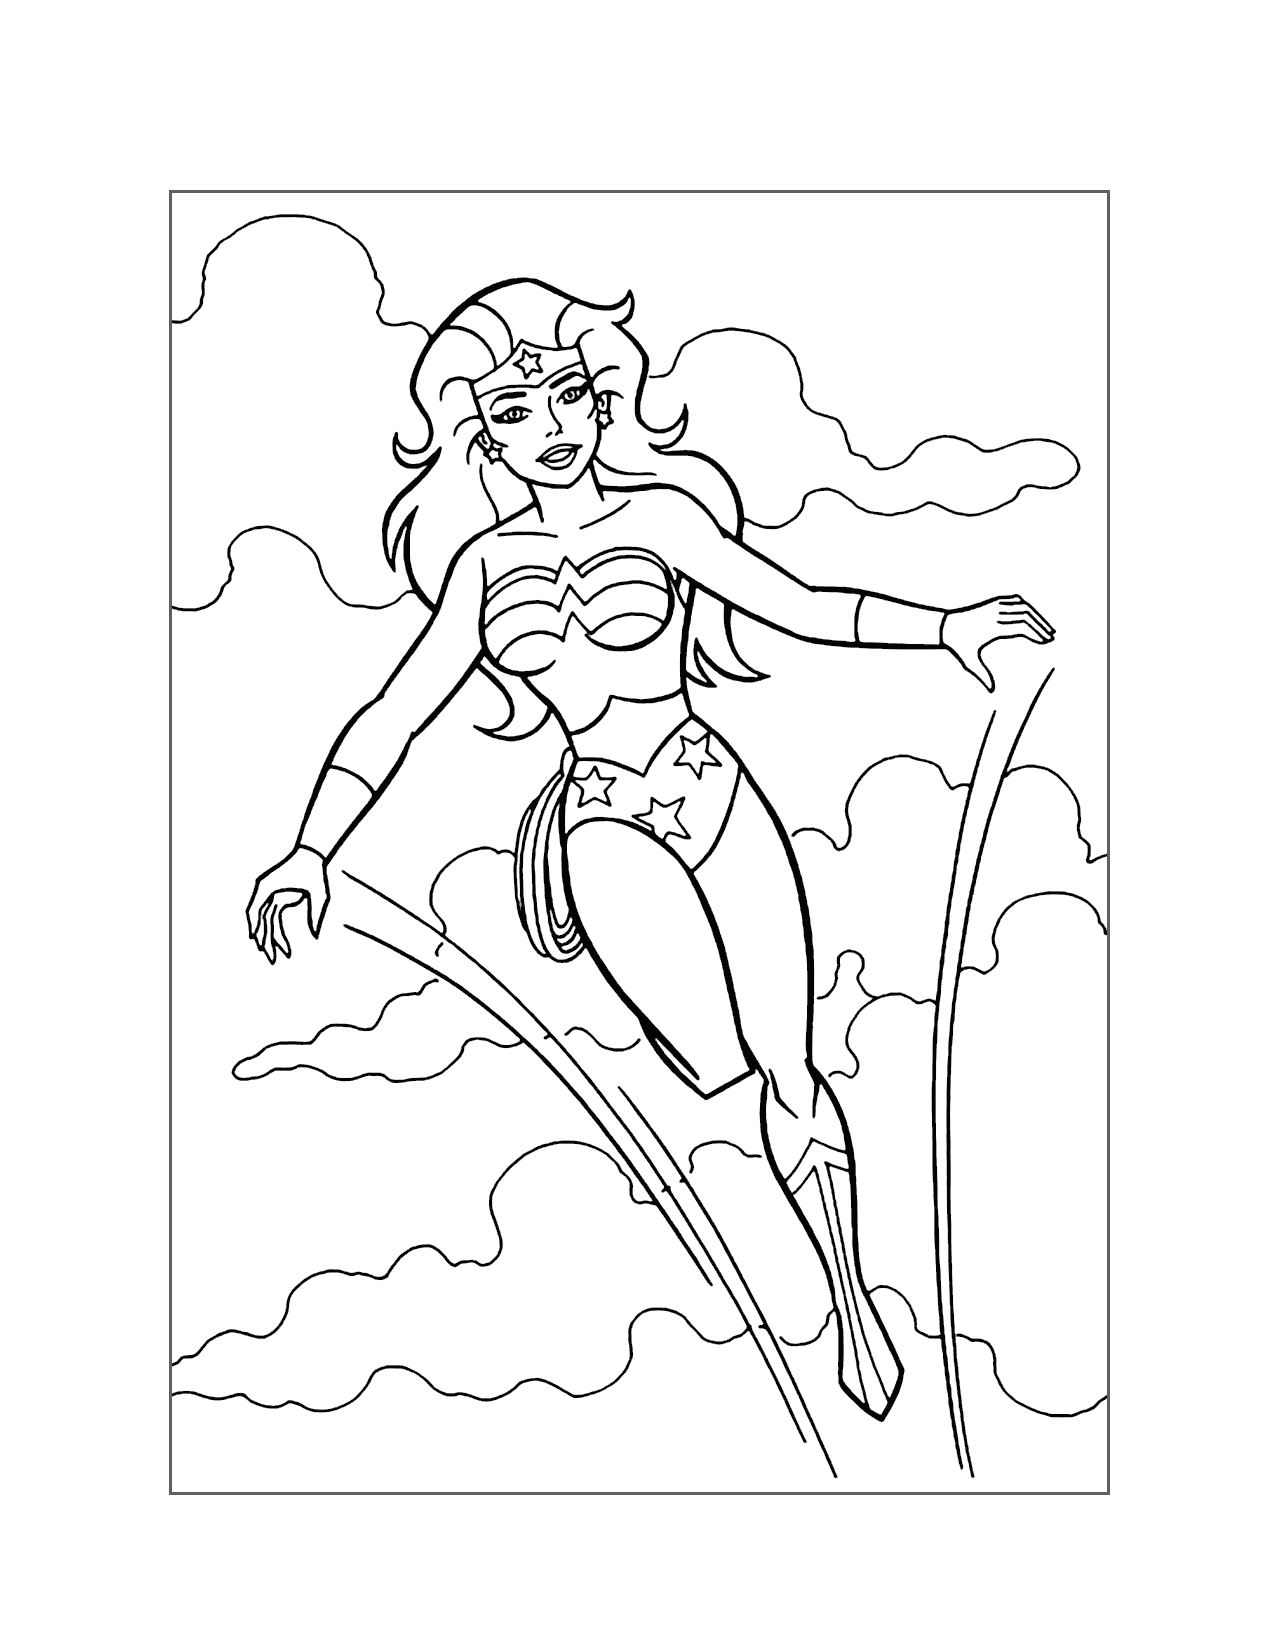 Superhero Wonder Woman Coloring Page